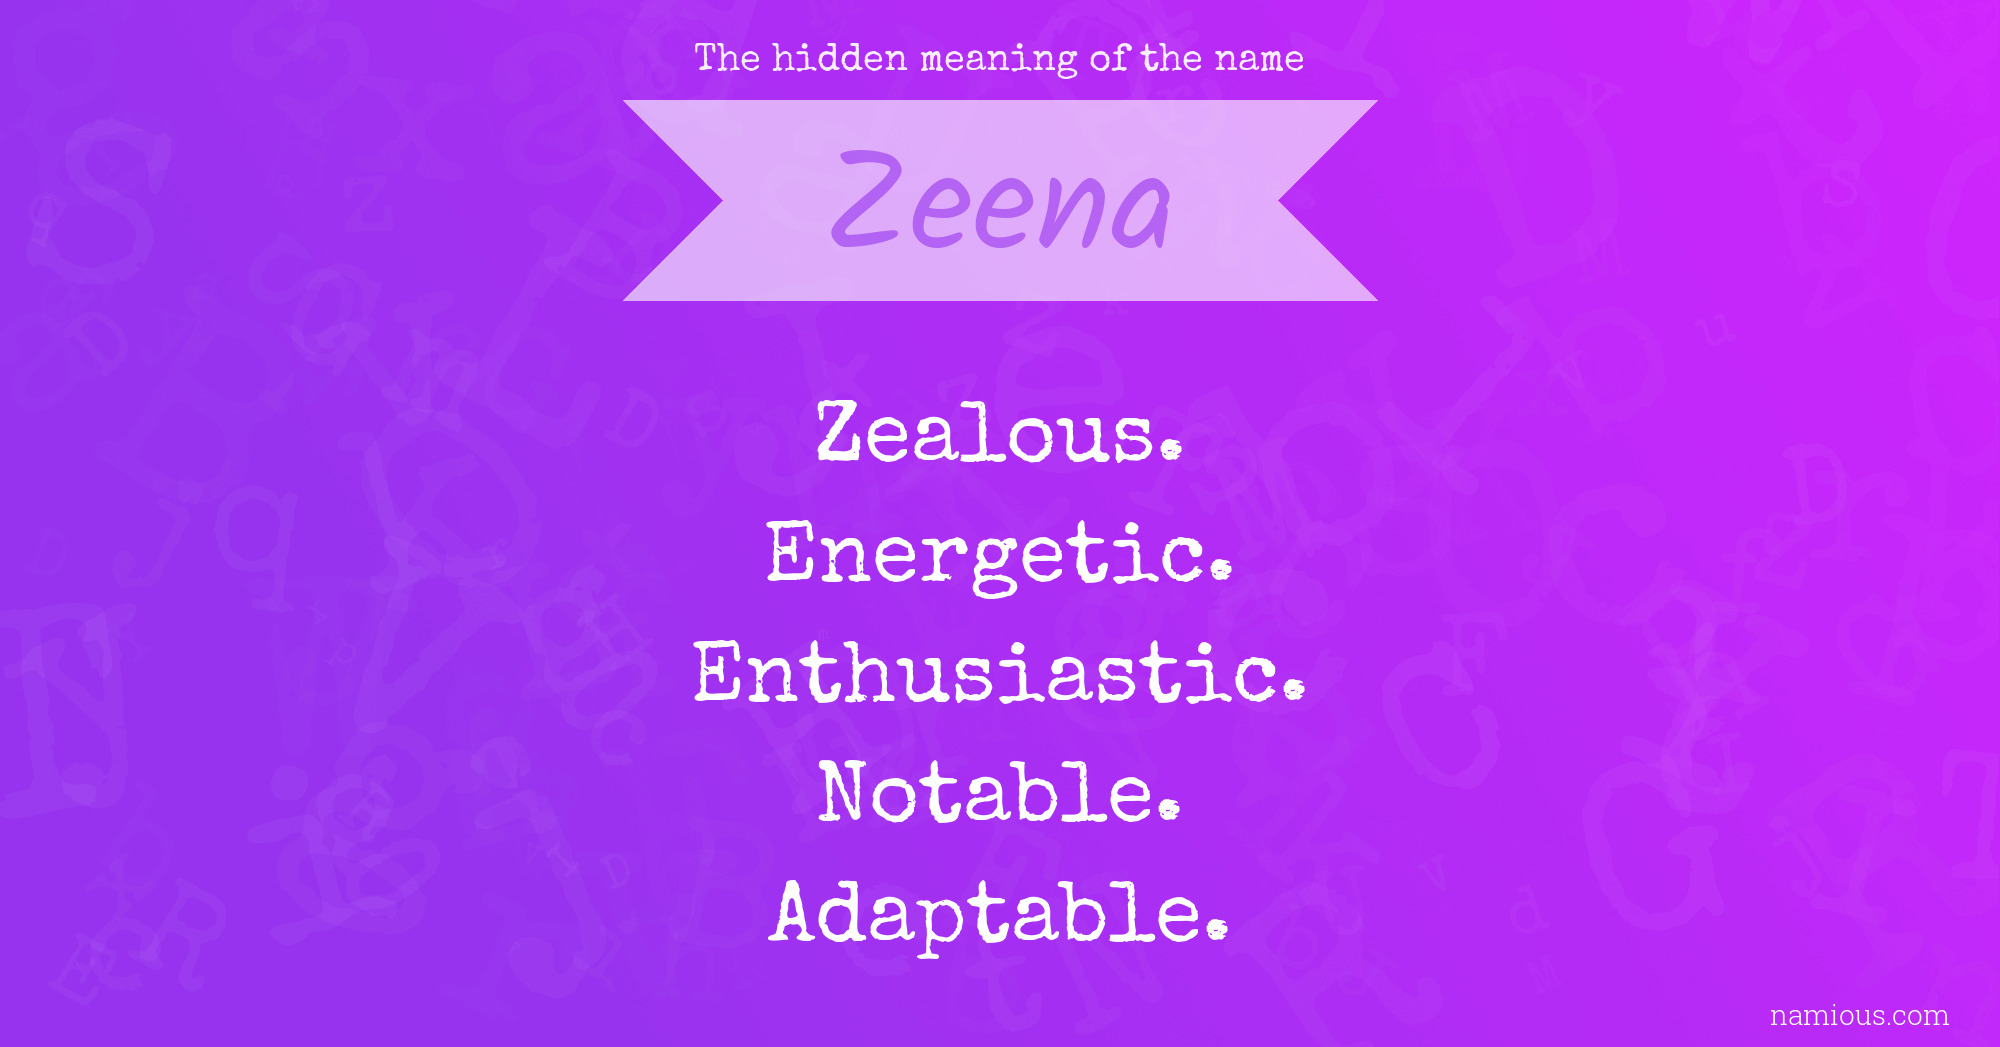 The hidden meaning of the name Zeena